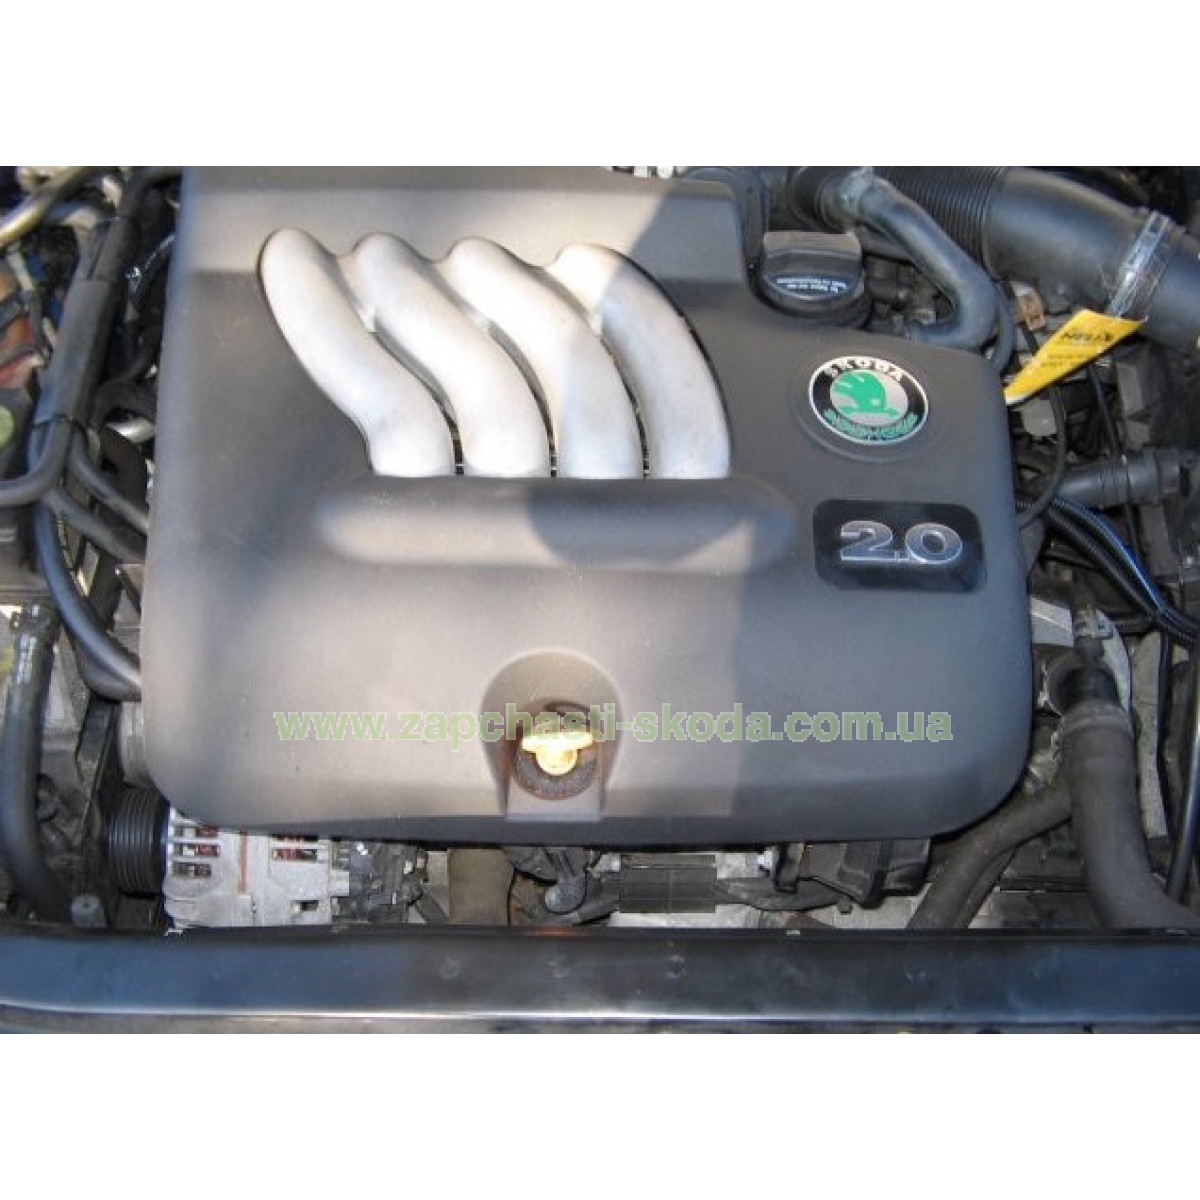 Двигатели Skoda Octavia | Масло, характеристики, ресурс